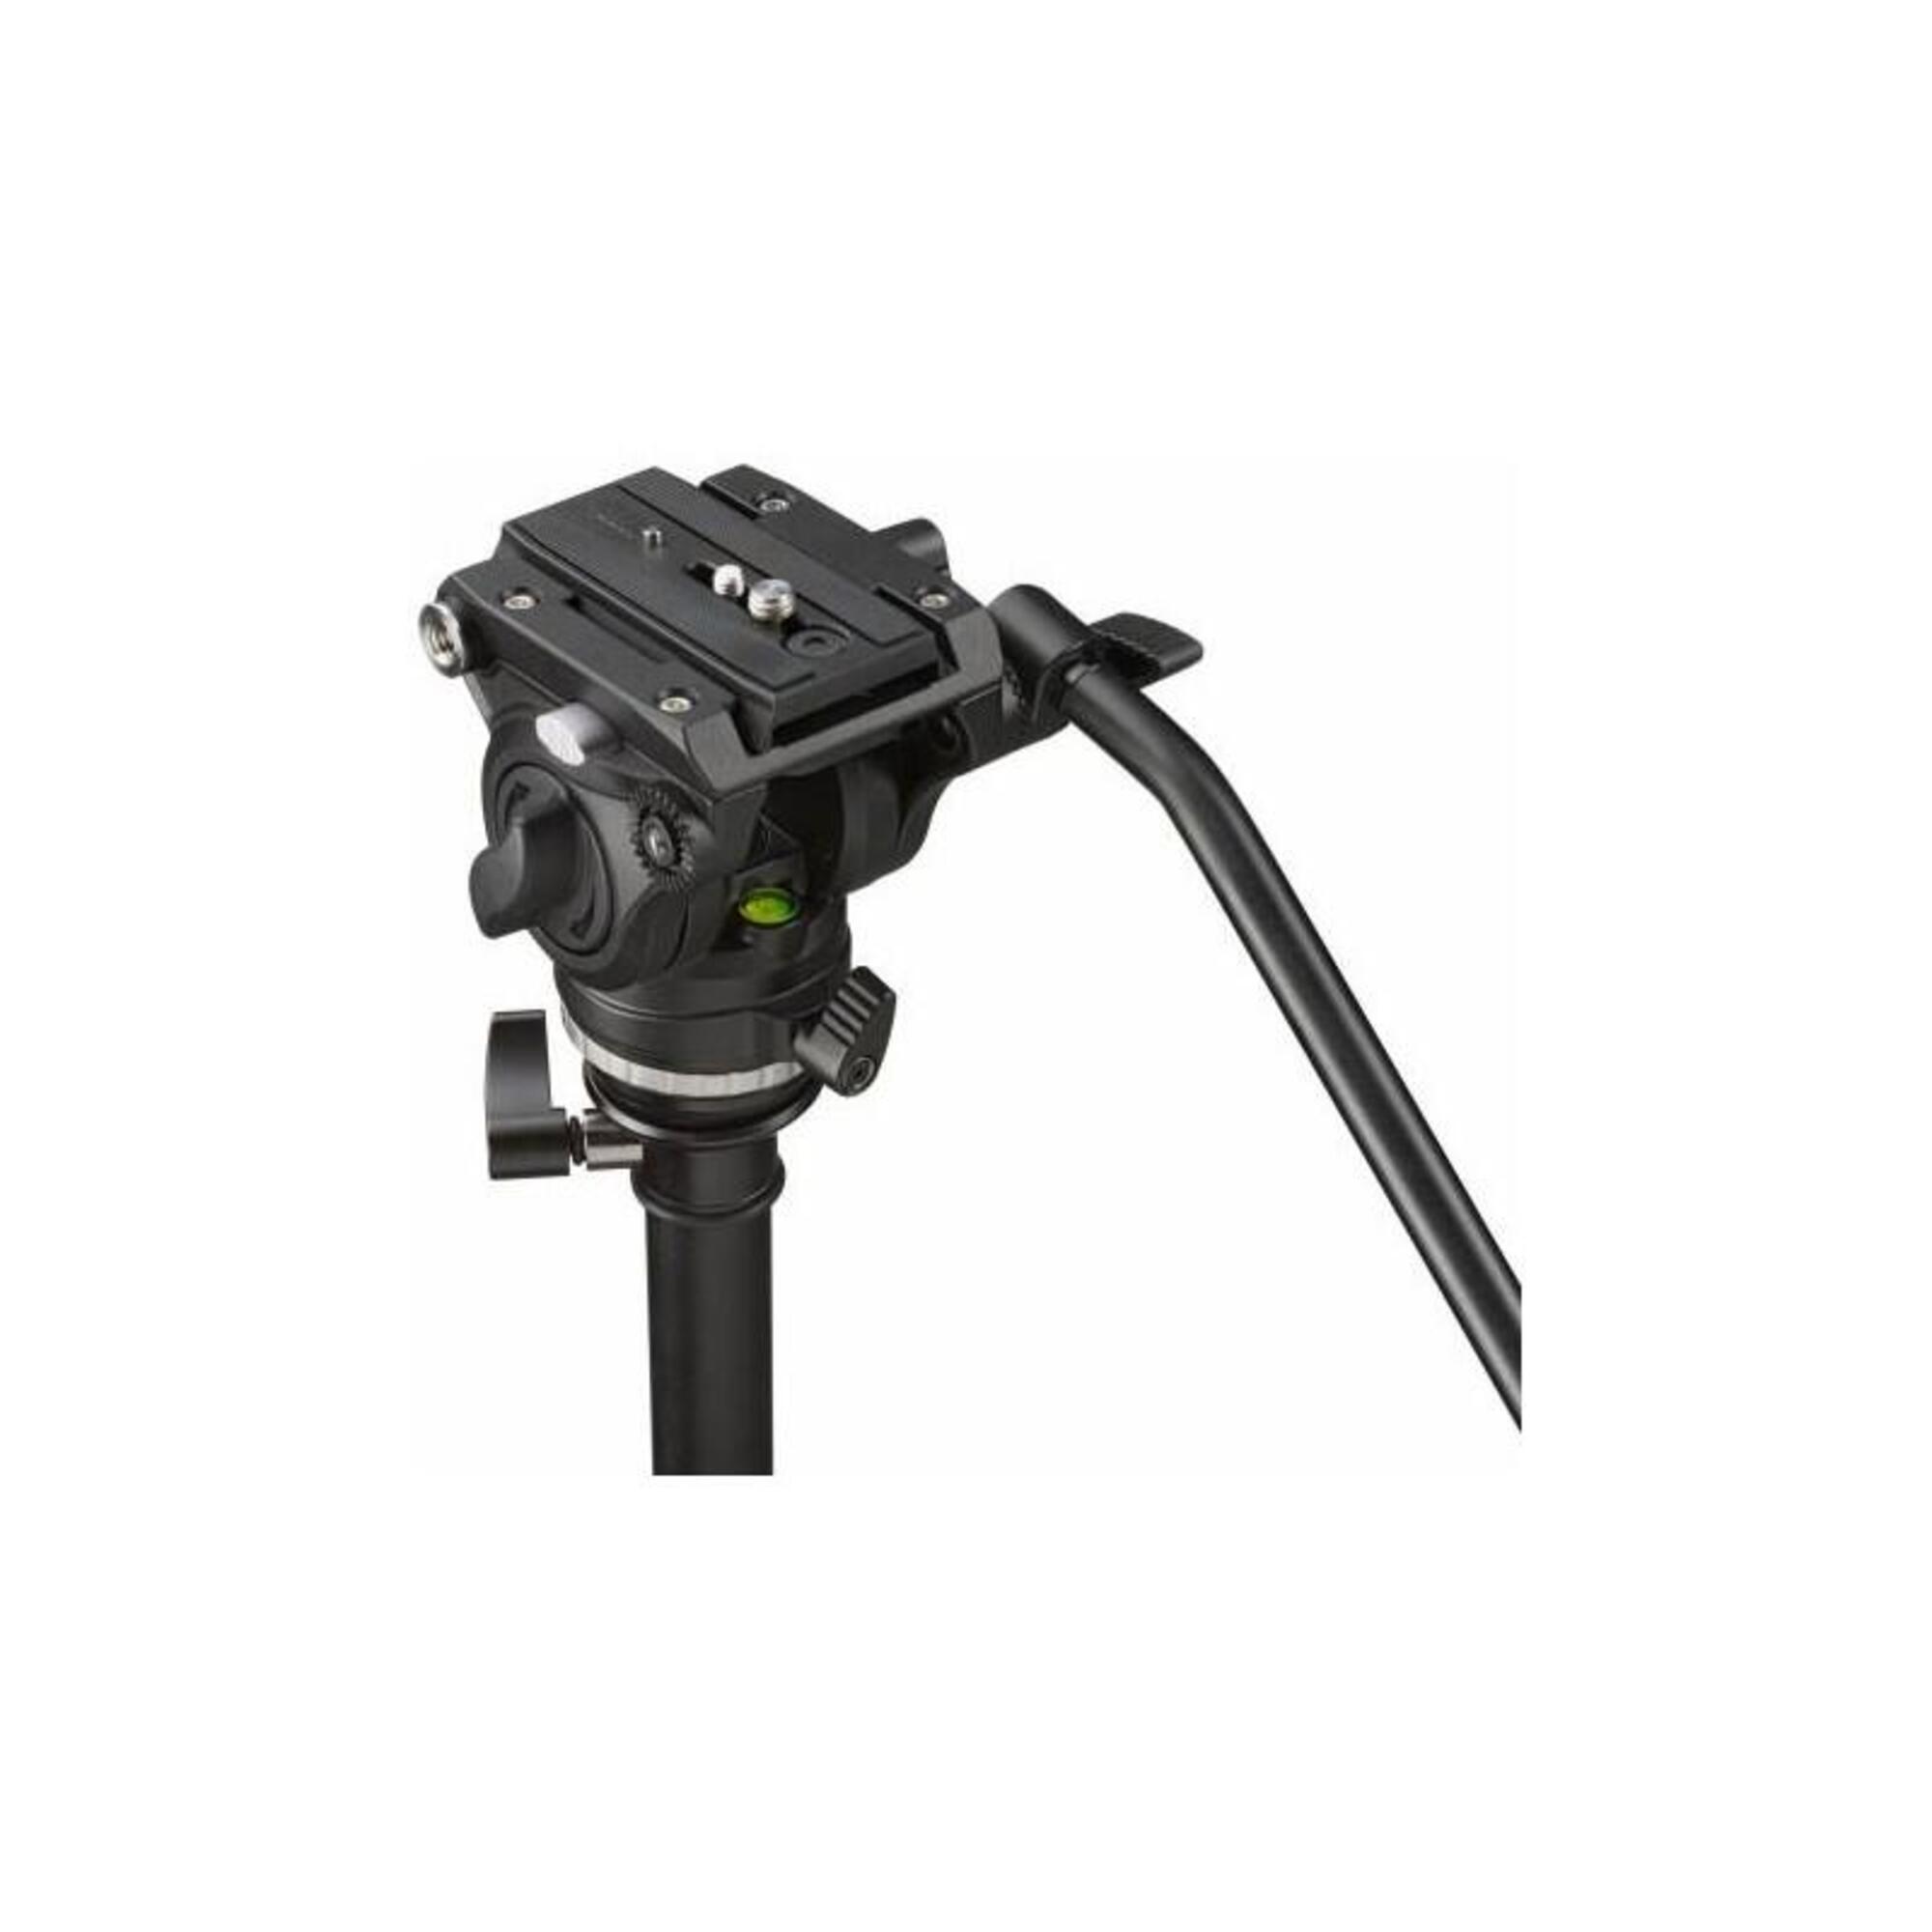 Tripé BX-5 Pro BRESSER para fotografia, vídeo, binóculos, escopos de spotting